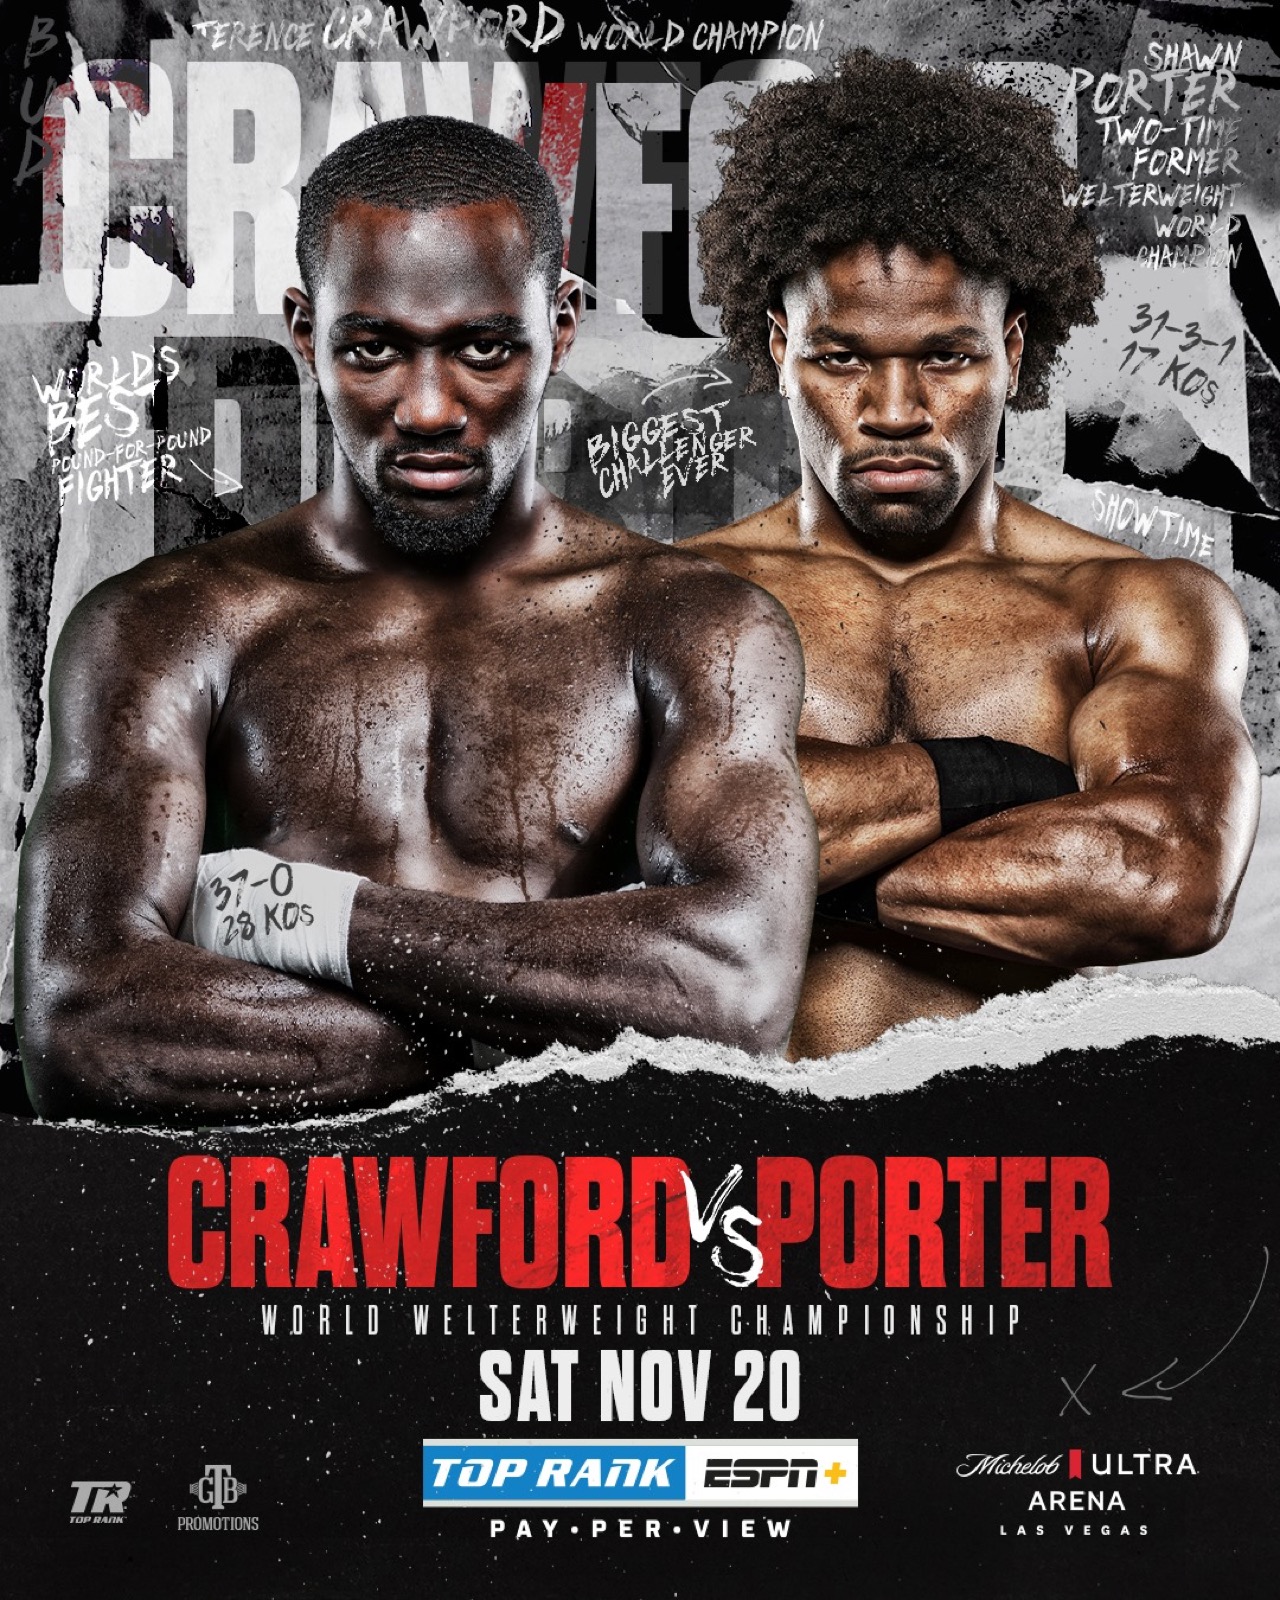 Shawn Porter, David Benavidez, Terence Crawford boxing photo and news image